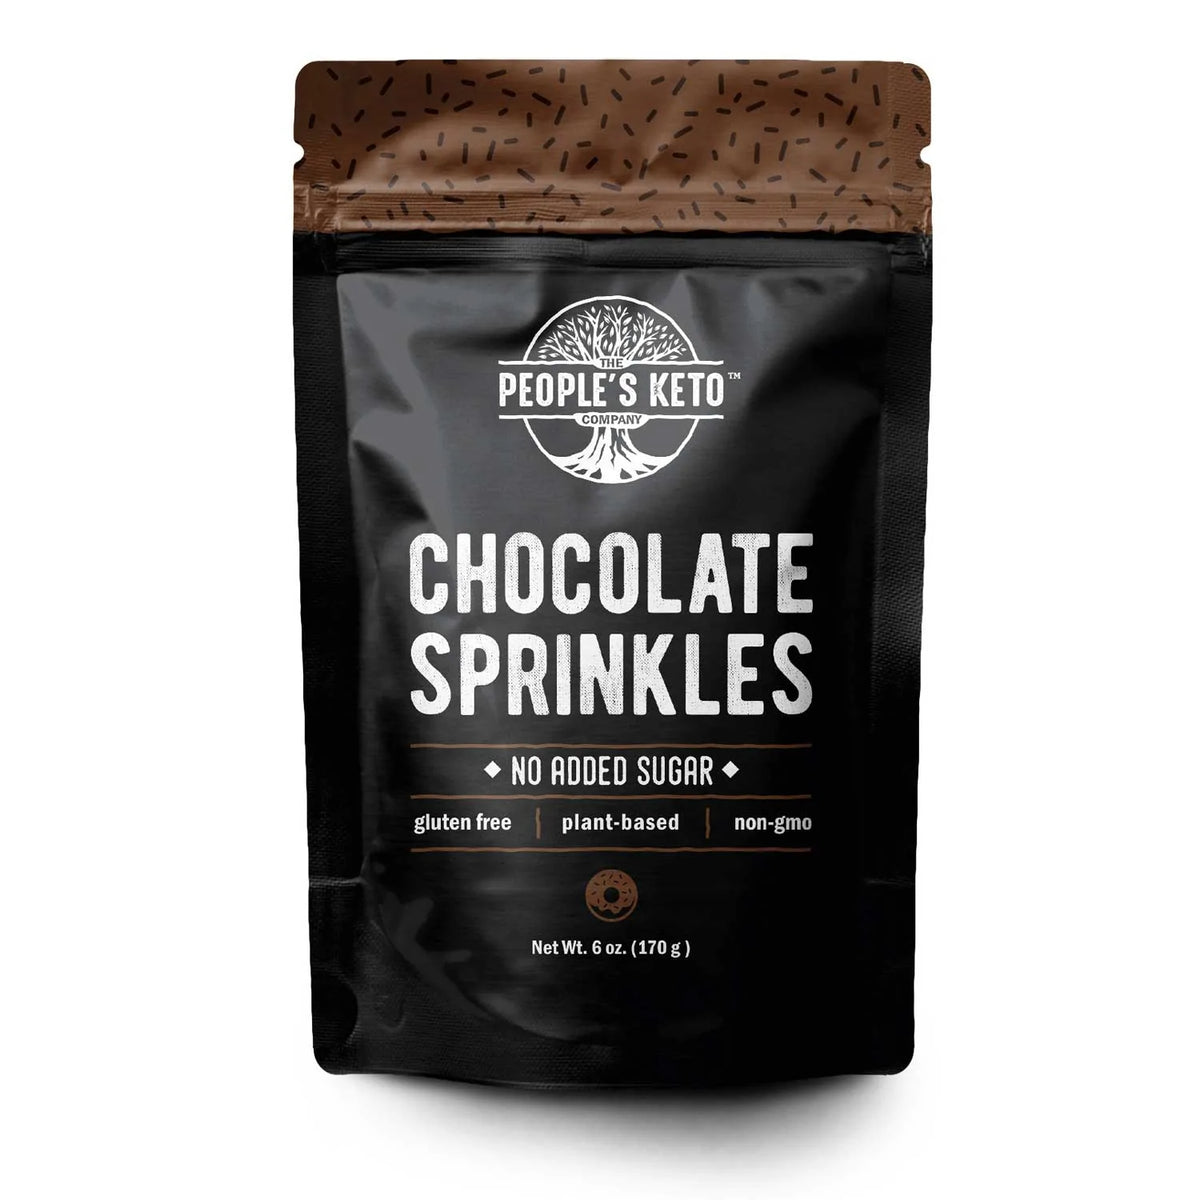 The People's Keto Company - Chocolate Sprinkles - 170g